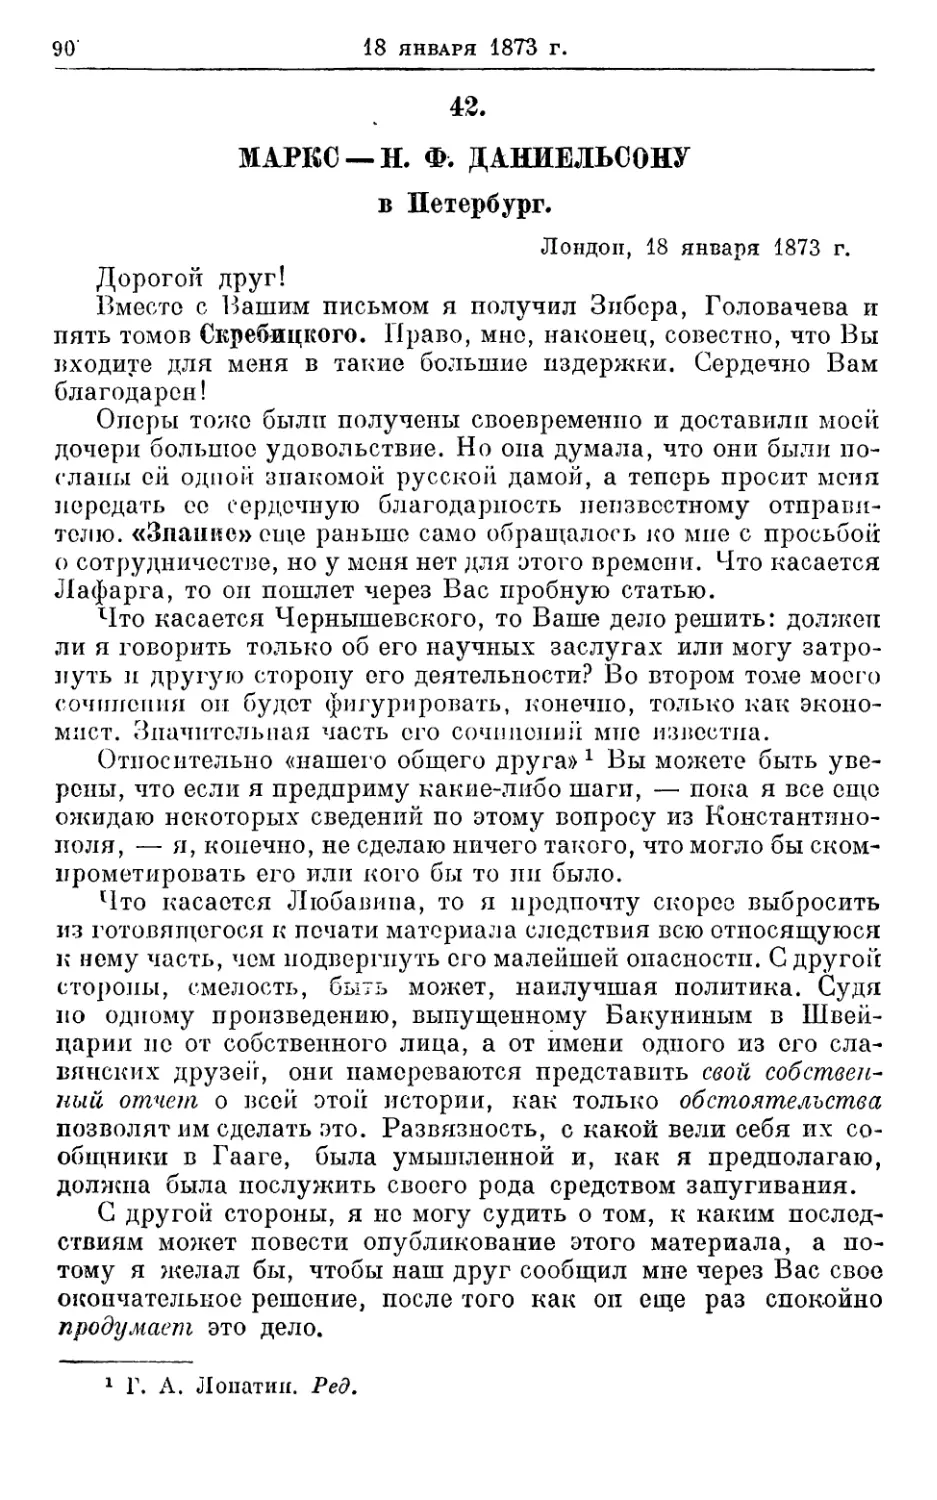 42. Маркс — Н. Ф. Даниельсону, 18 января 1873г